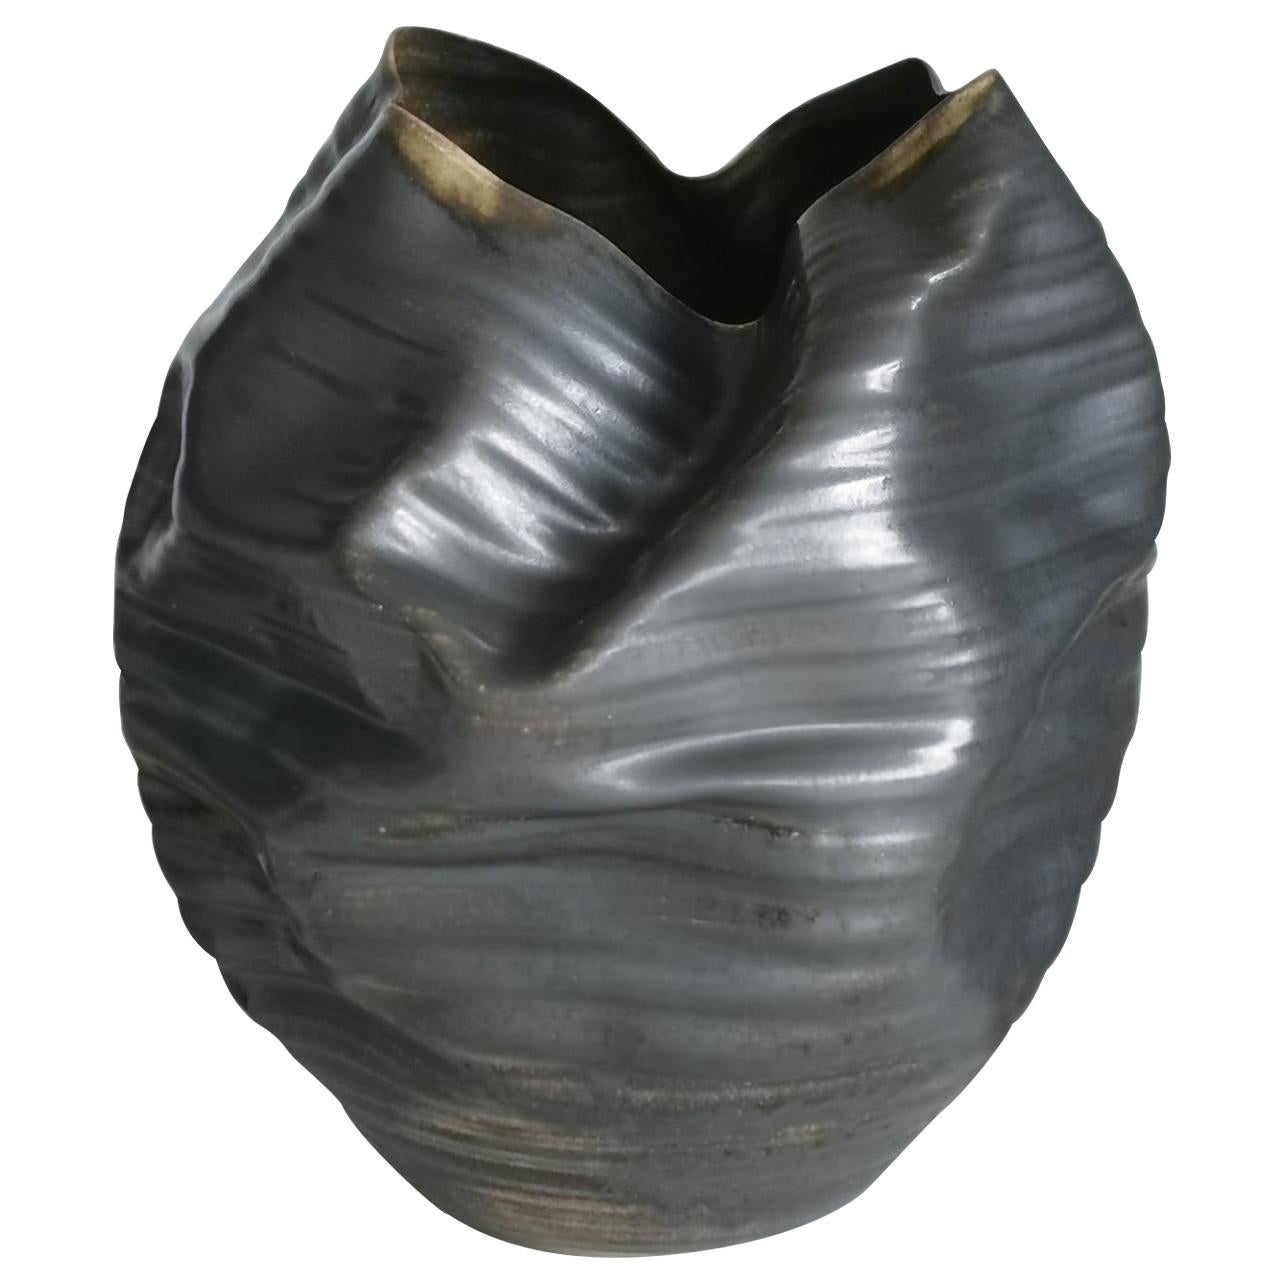 Unique Ceramic Sculpture Vessel N.58, Black Ribbed Undulating Form, Objet d'Art